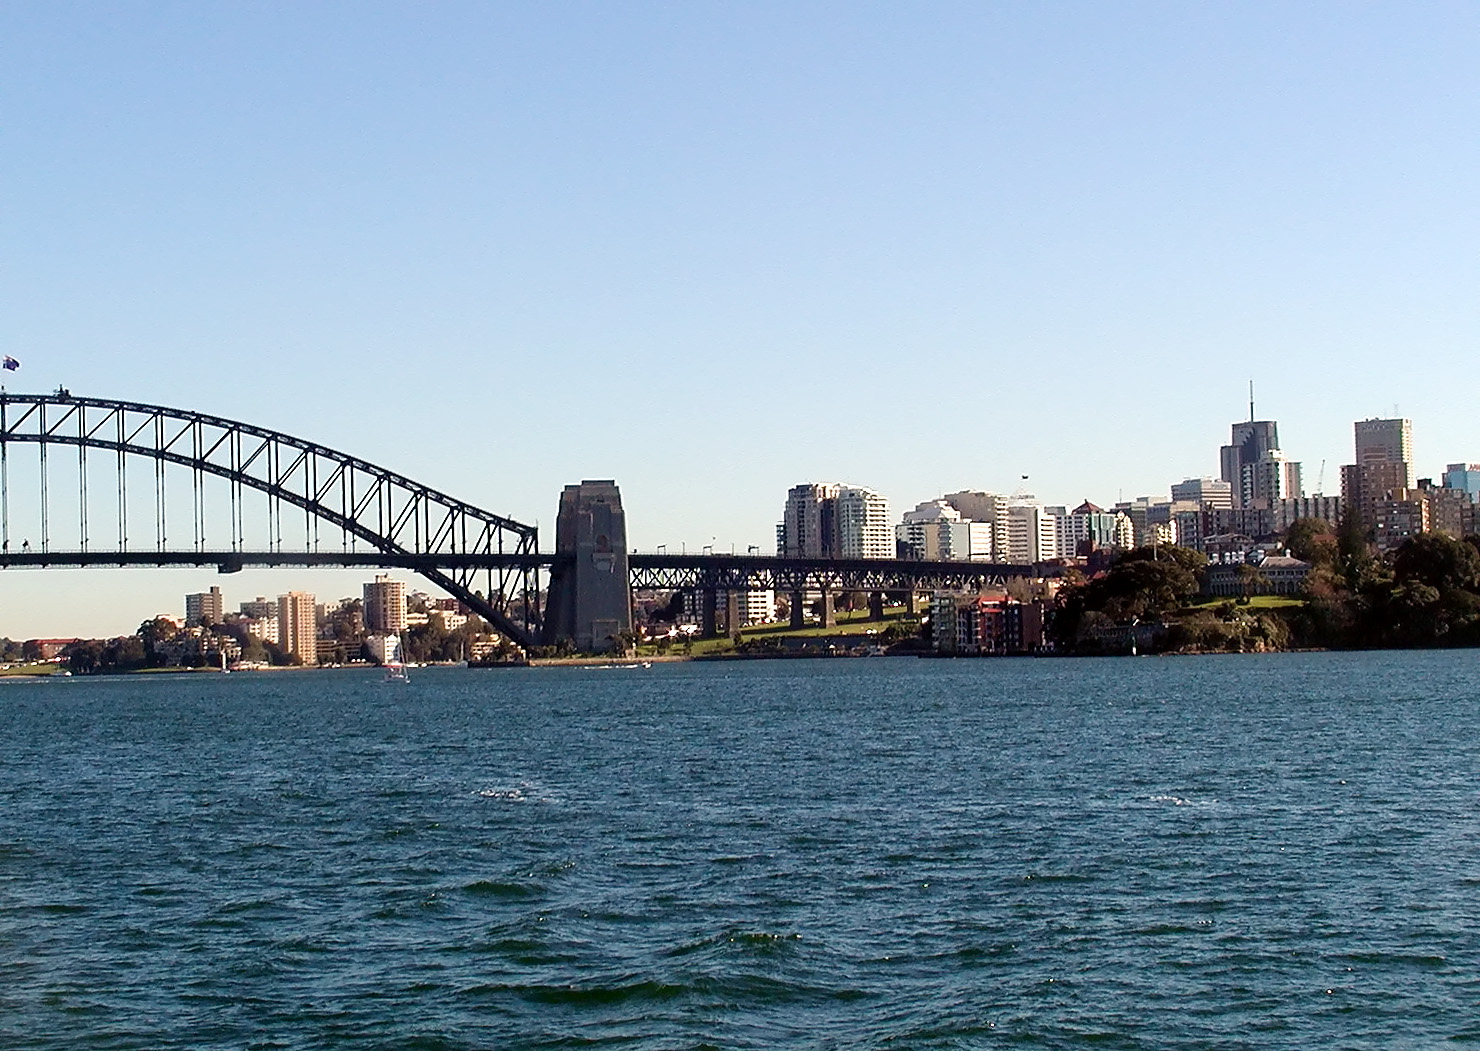 17-Jun-2001 10:13 - Sydney - The Harbour Bridge and North Sydney